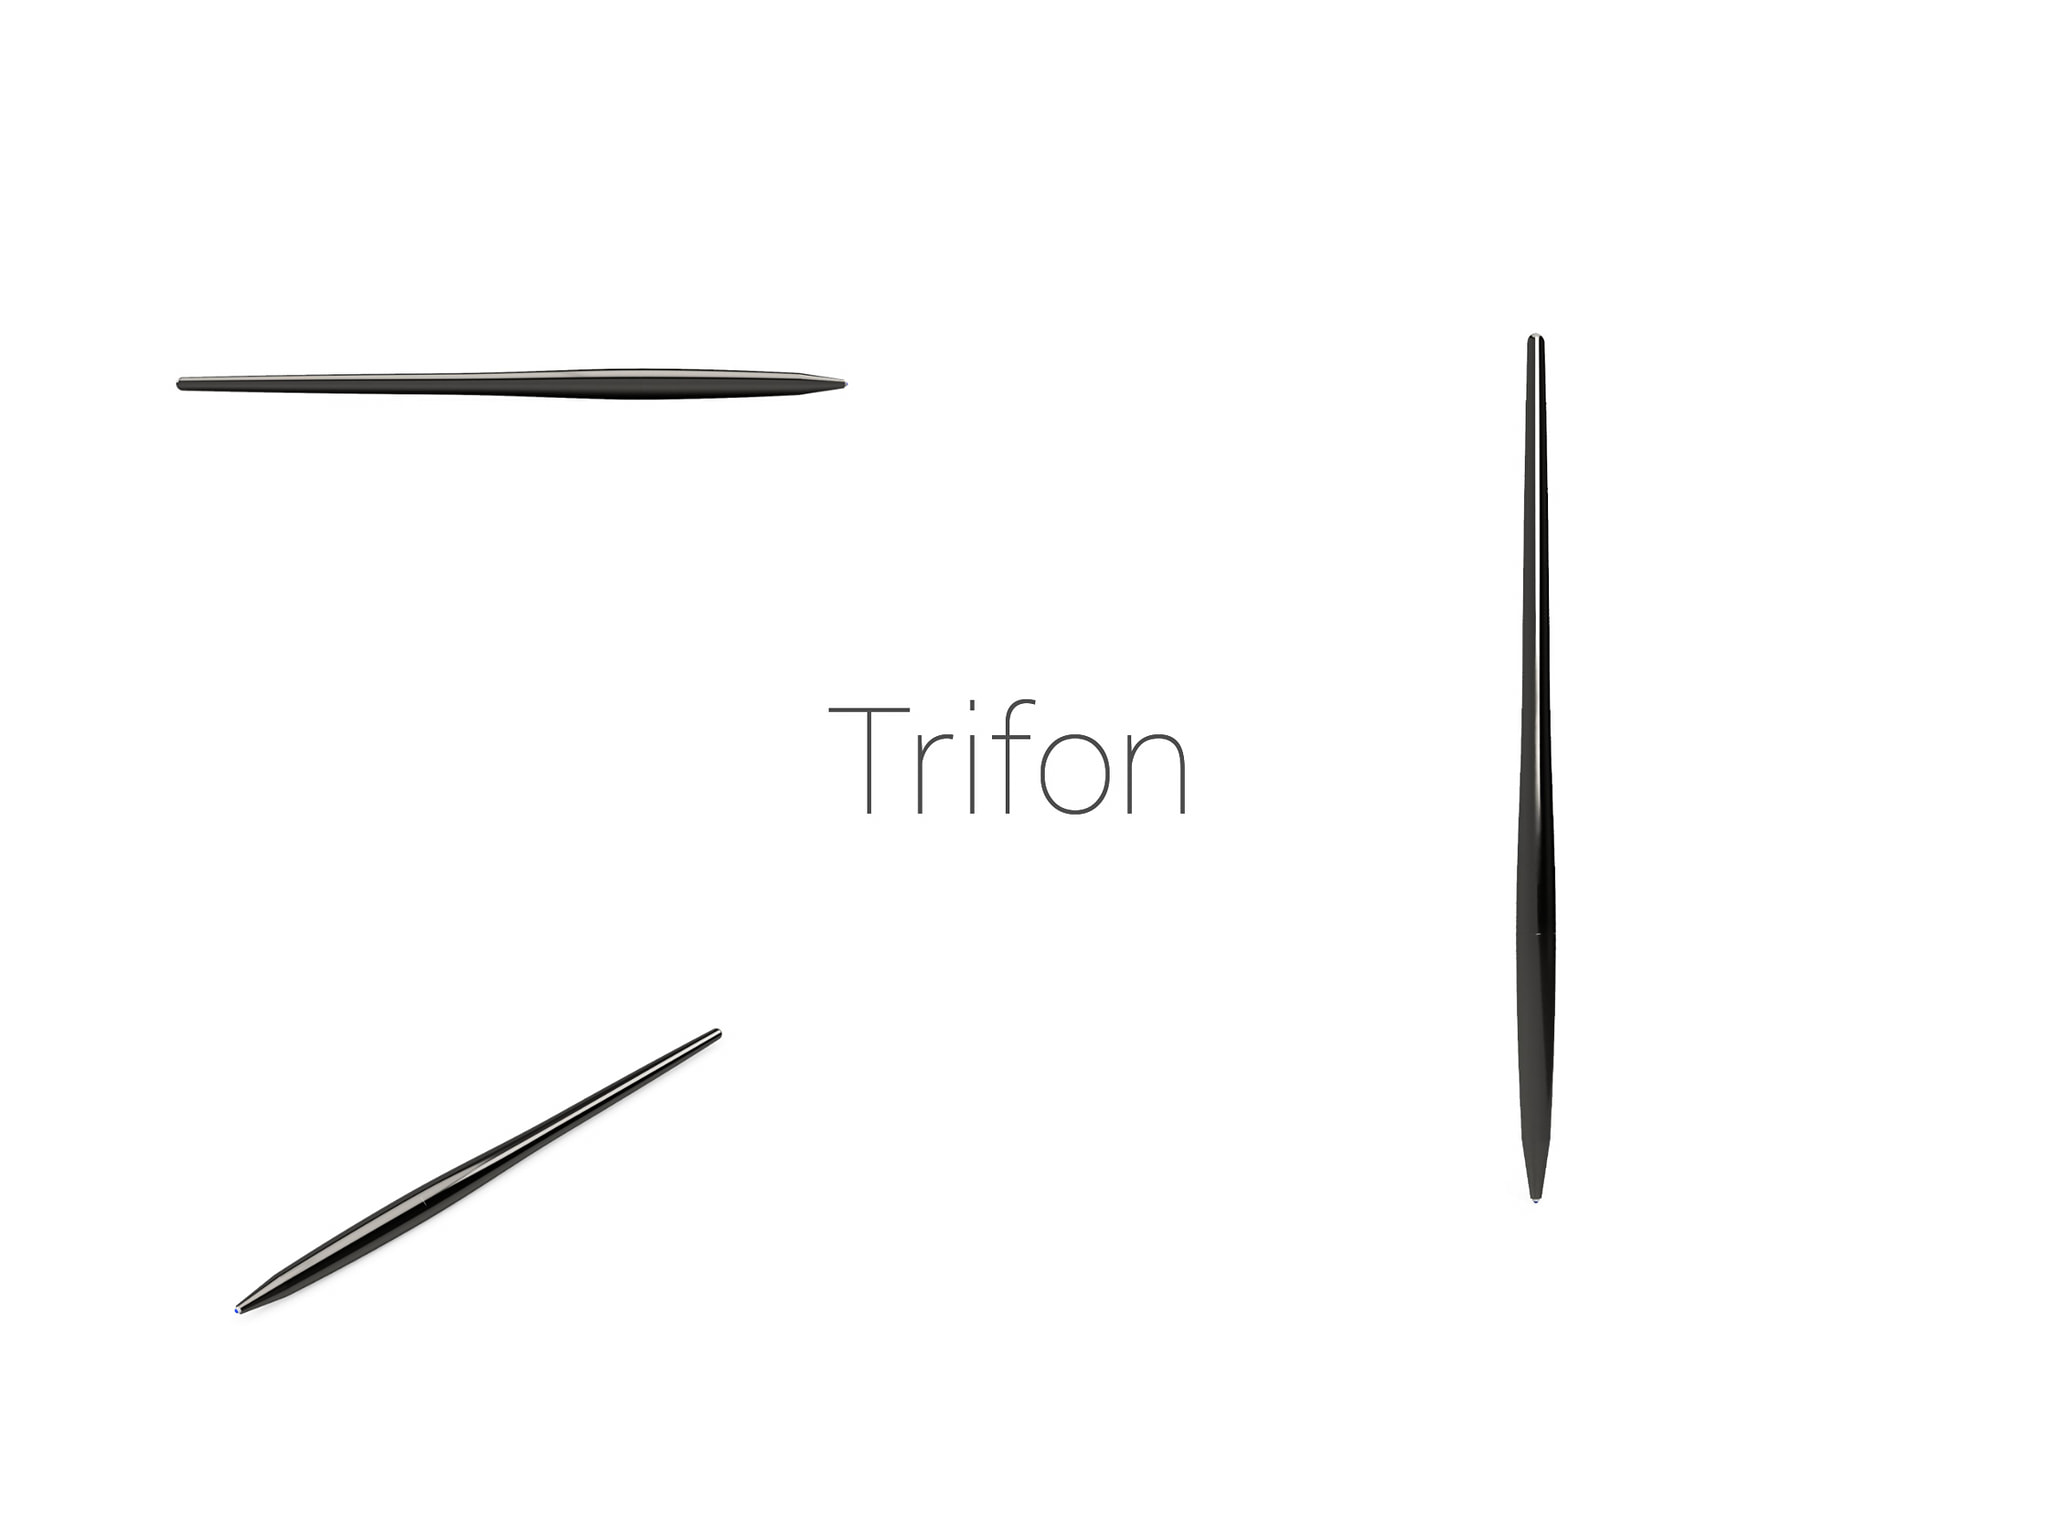 [Trifon]
penna in titanio